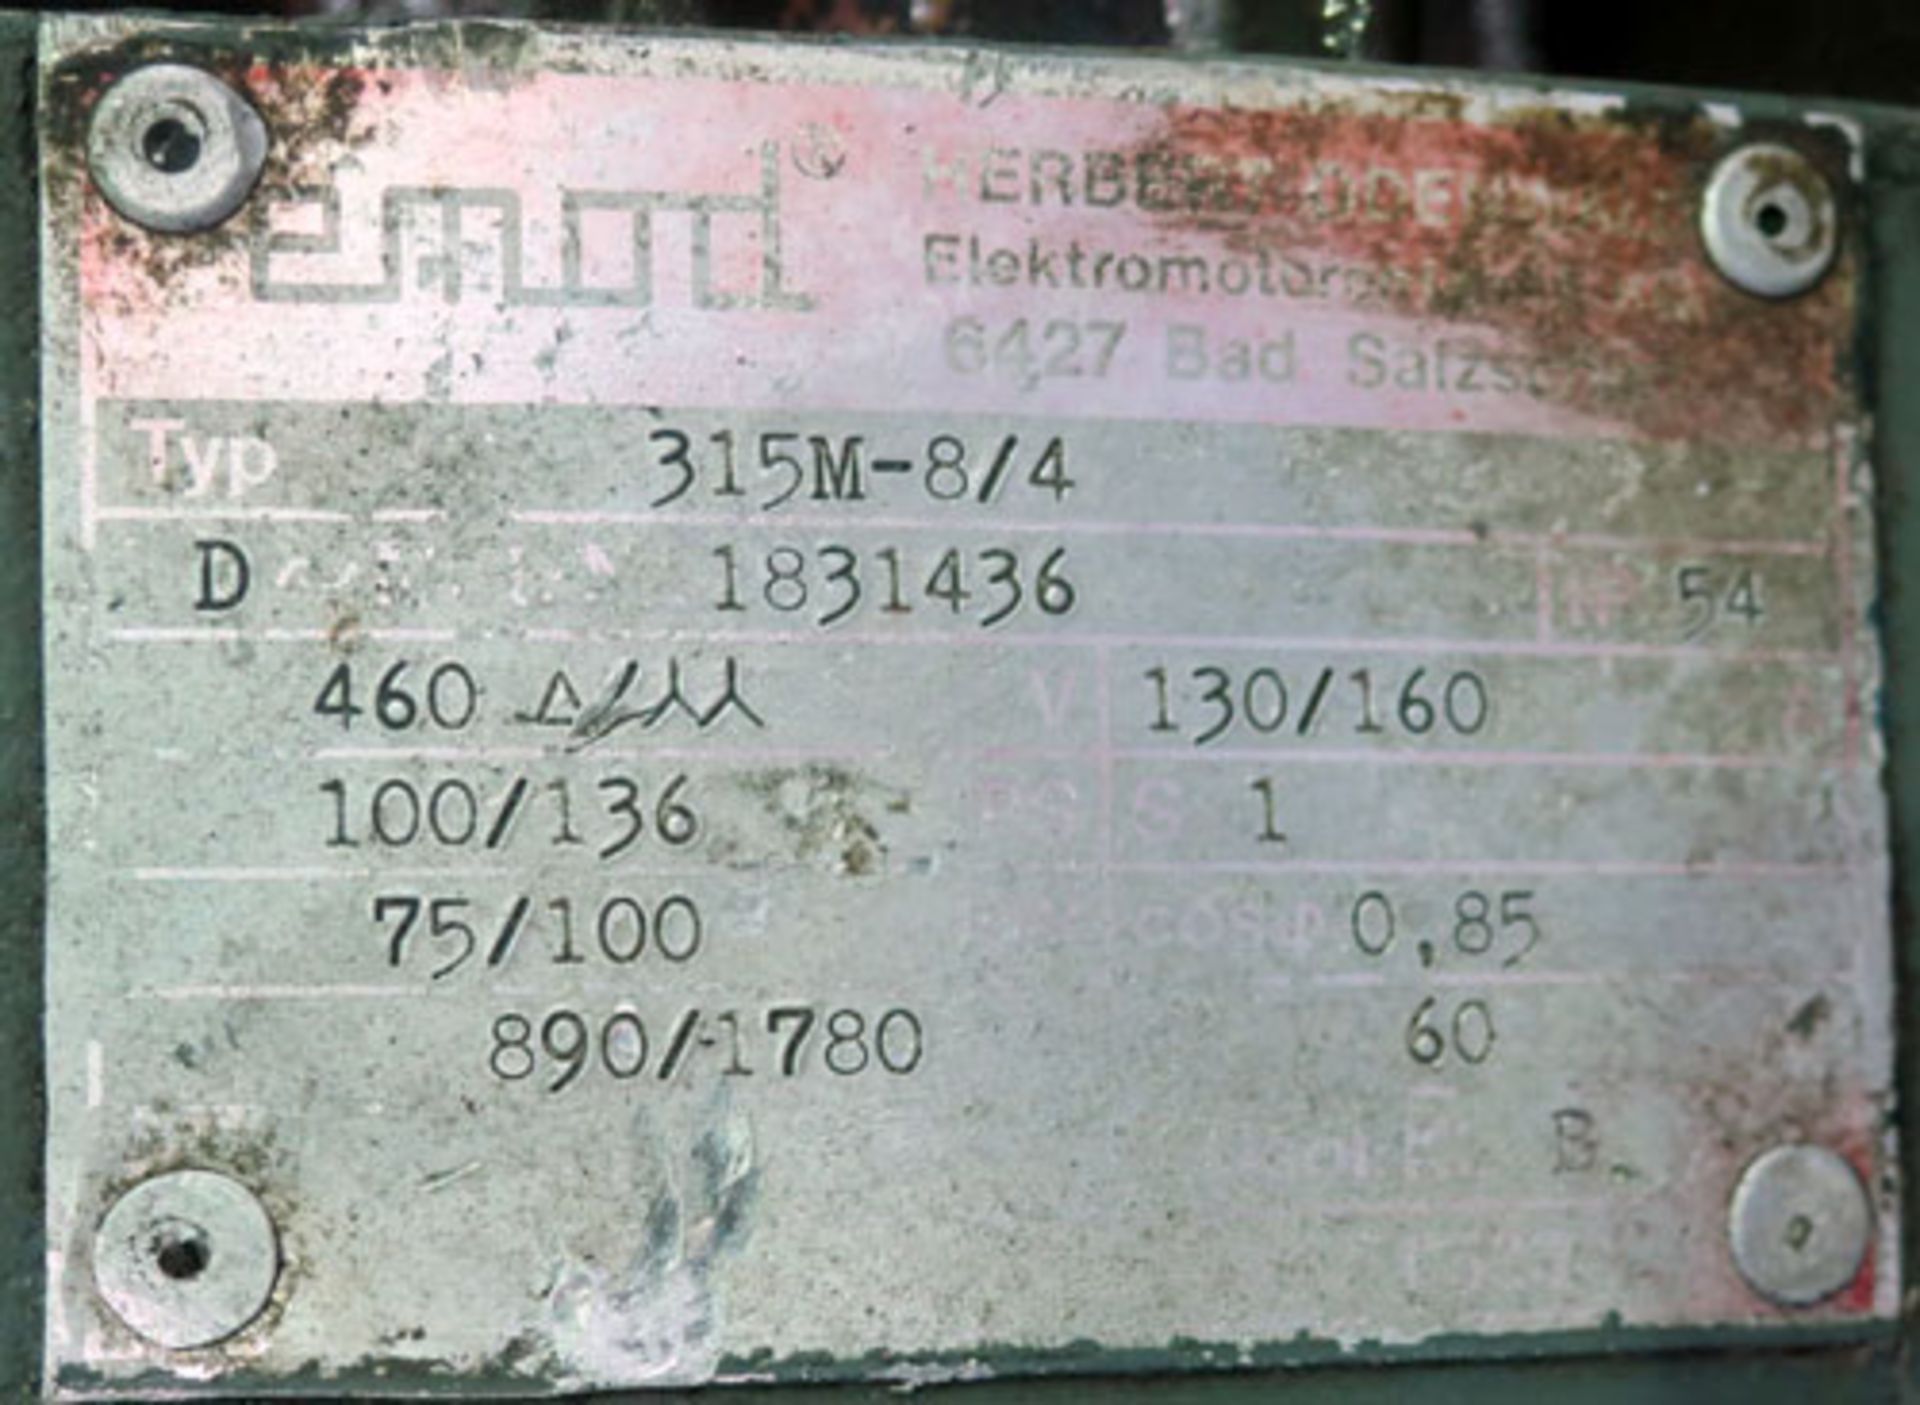 Emod motor, Type 315M-8/4. 3/60/460v, 890/1780 RPM 50/100 HP. Serial # 1831436. - Image 9 of 9